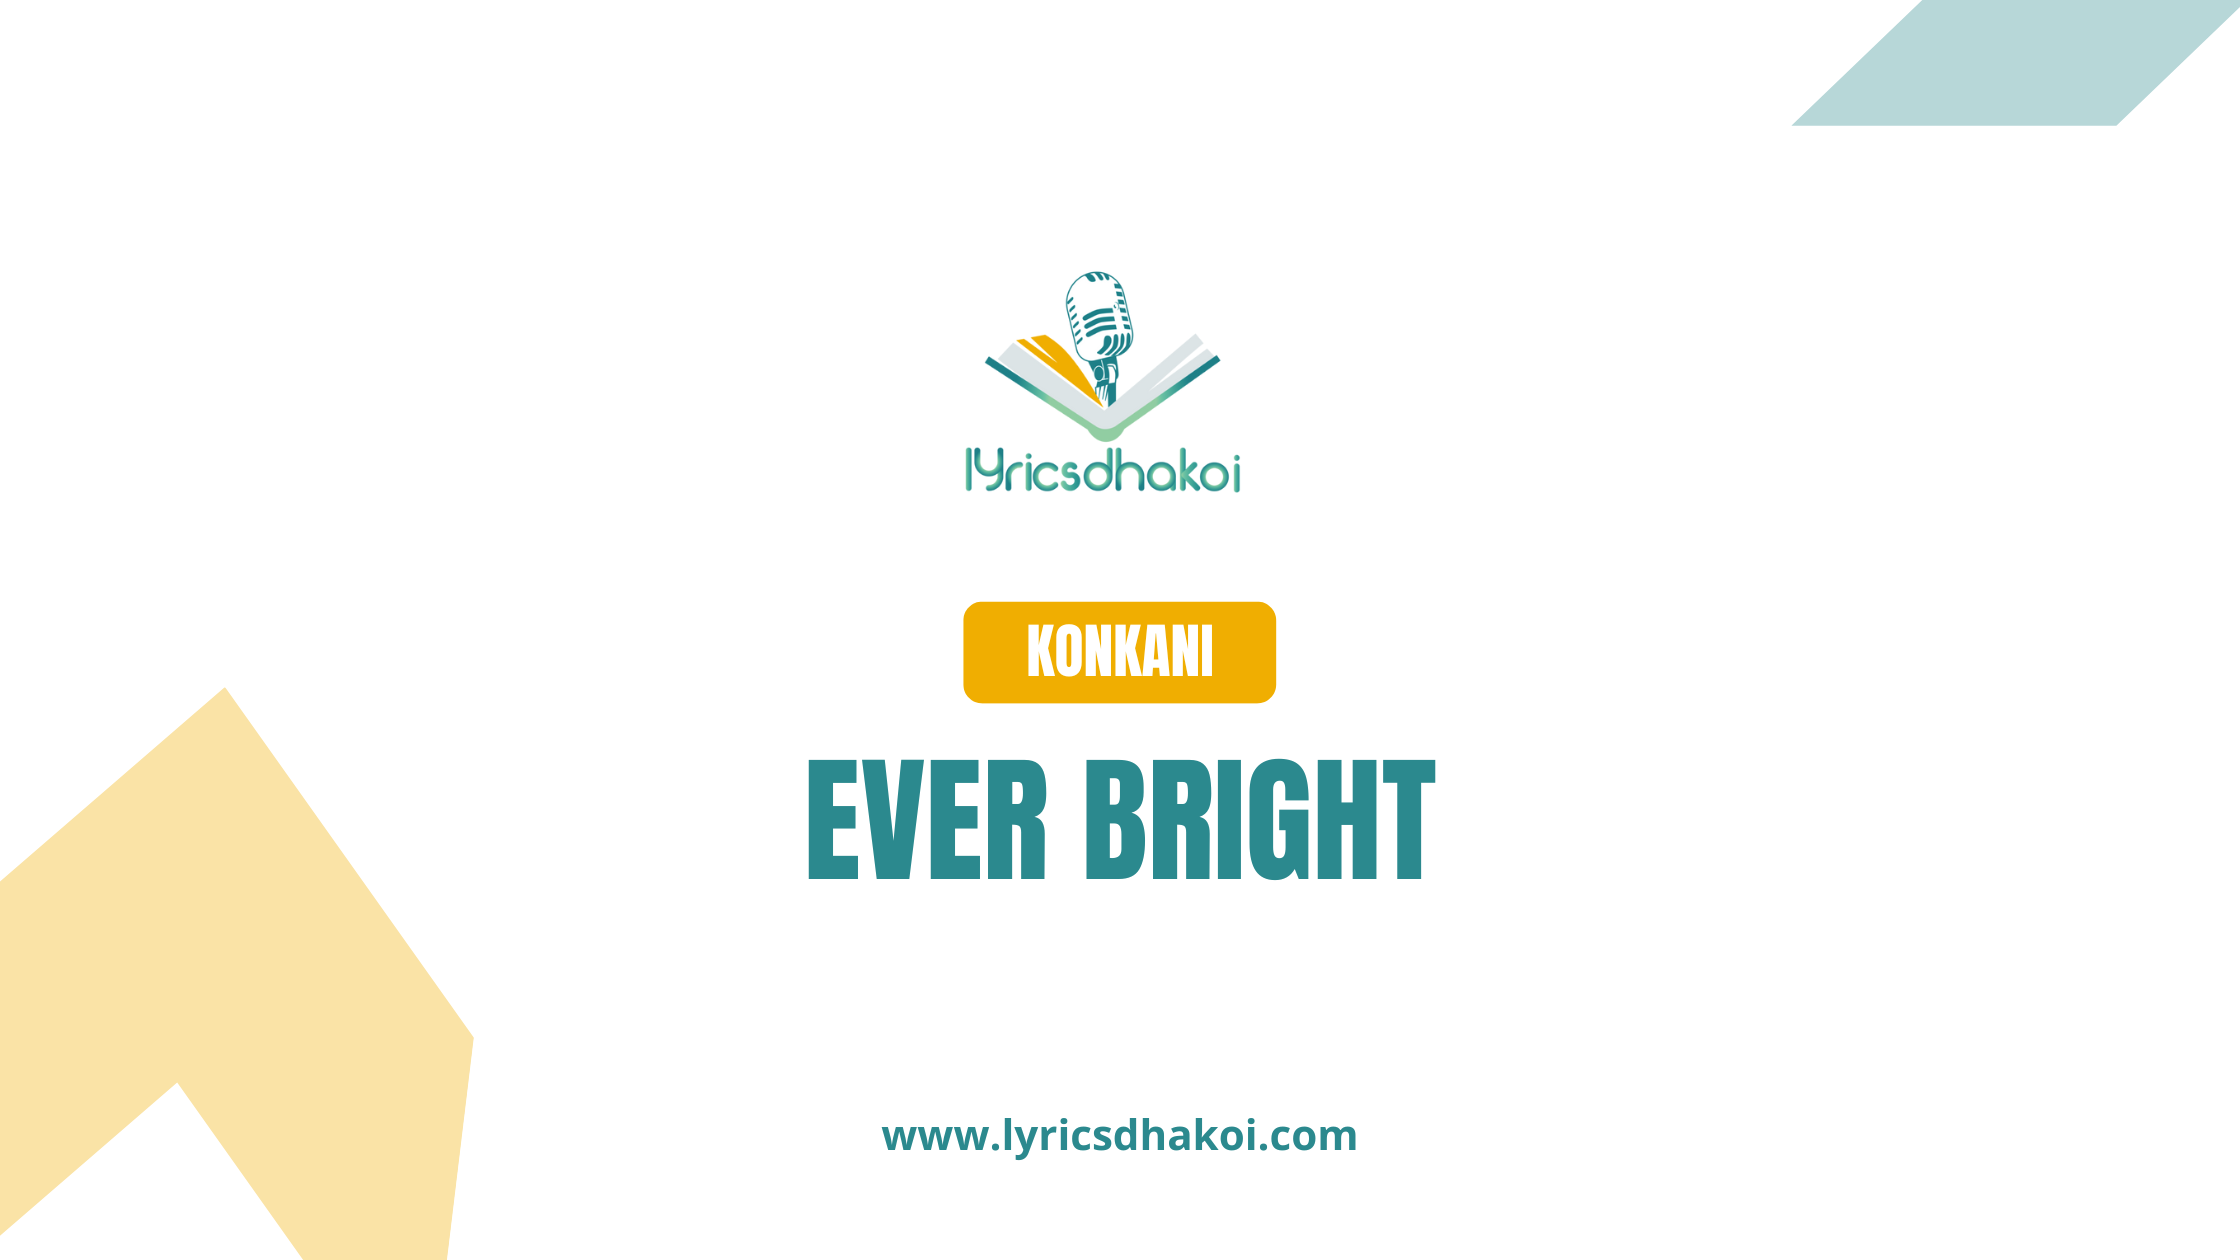 Ever Bright Konkani Lyrics for Karaoke Online - LyricsDhakoi.com